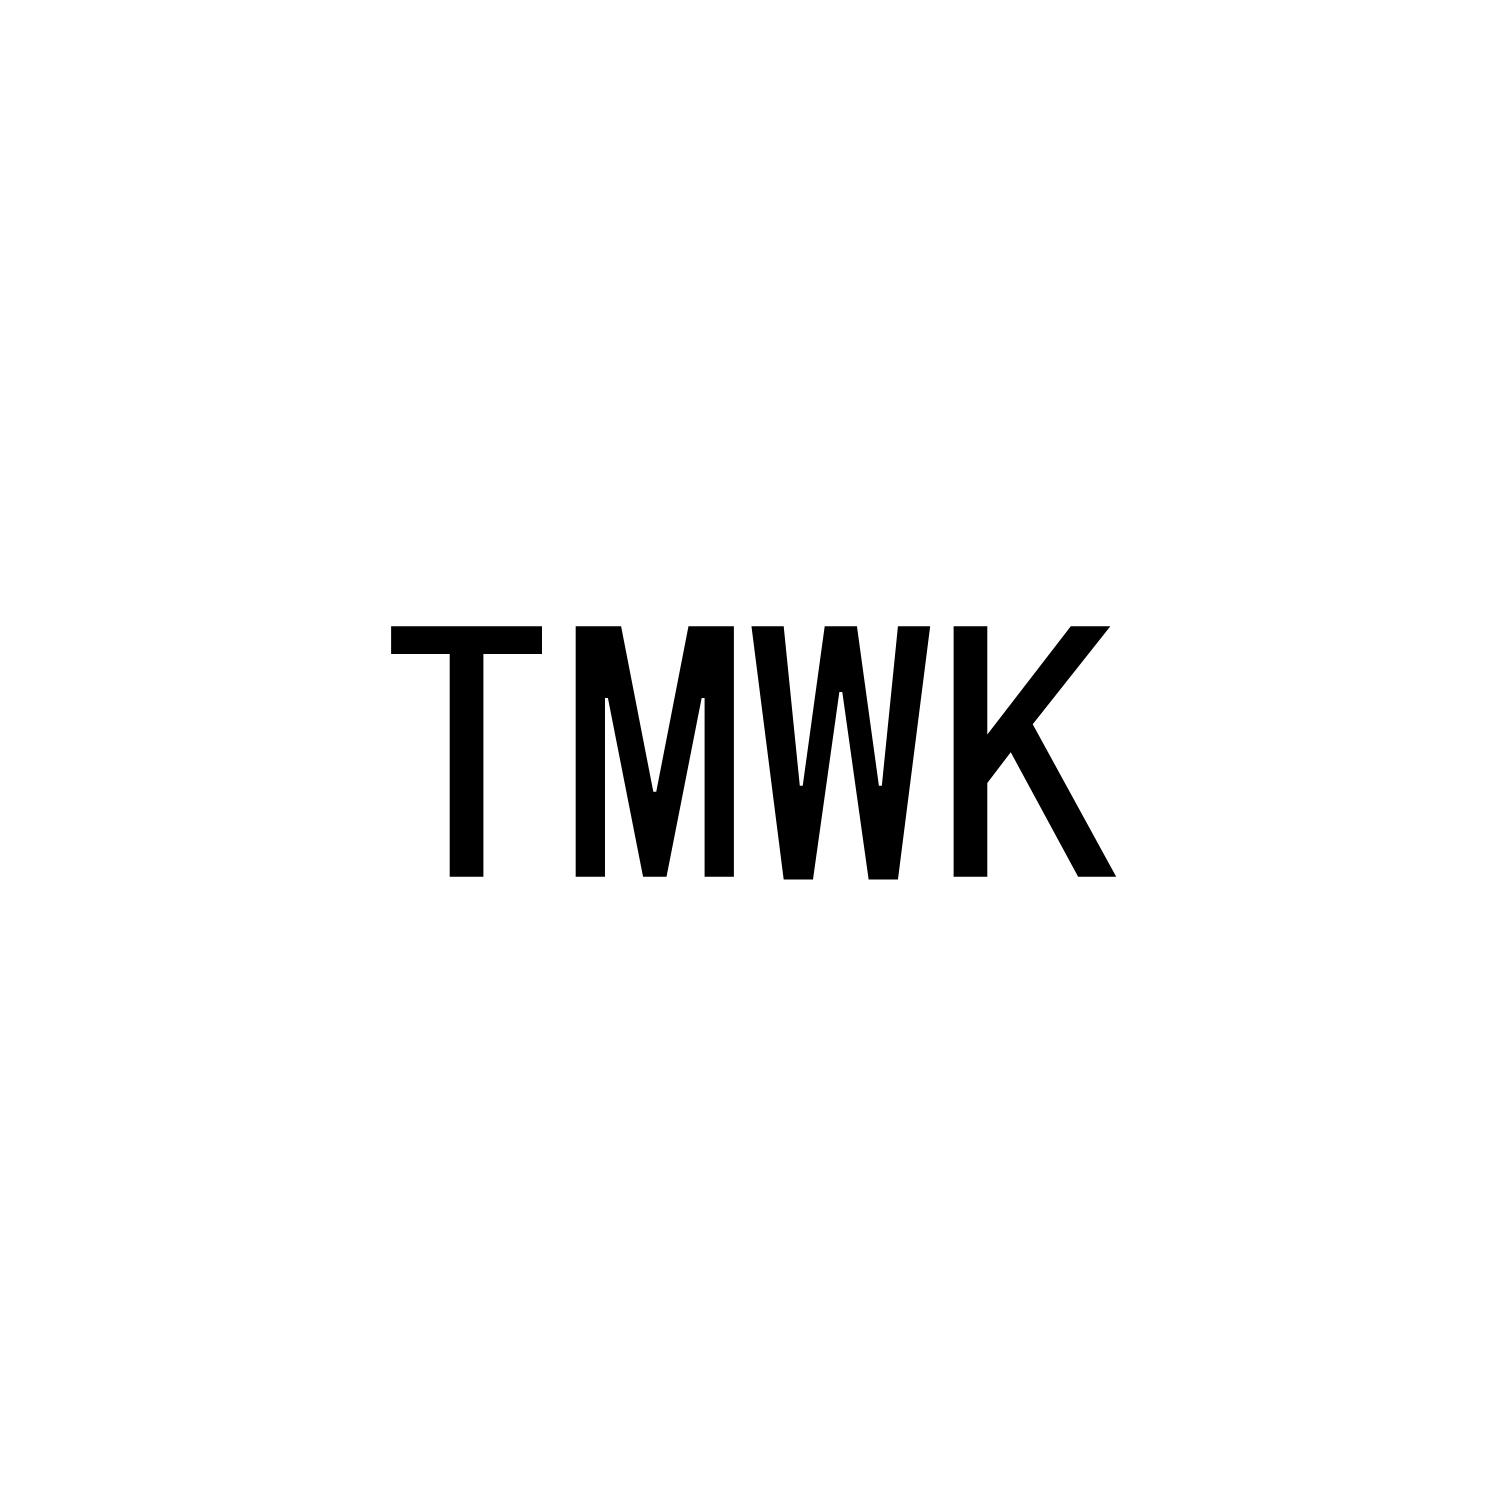 TMWK